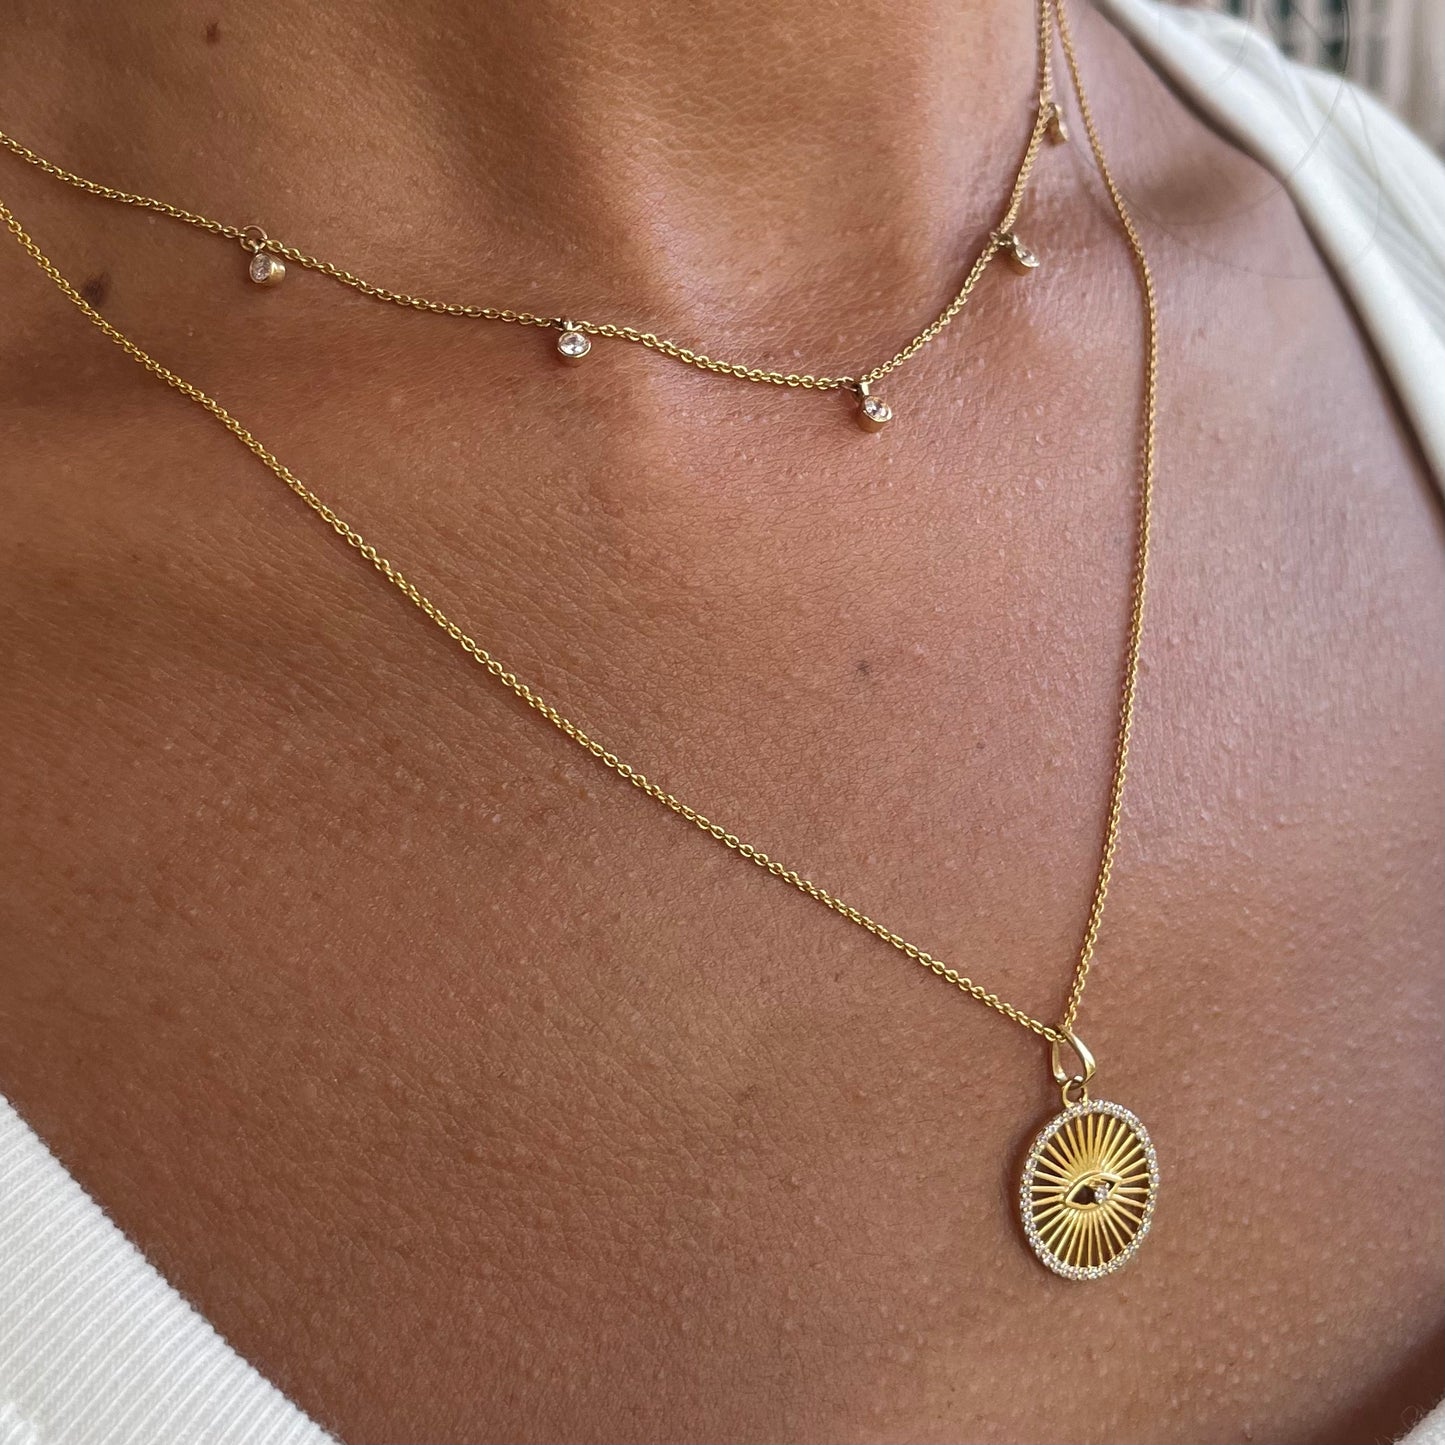 Evil Eye Medallion Necklace - - Jewelry - Goldie Paris Jewelry - Necklace